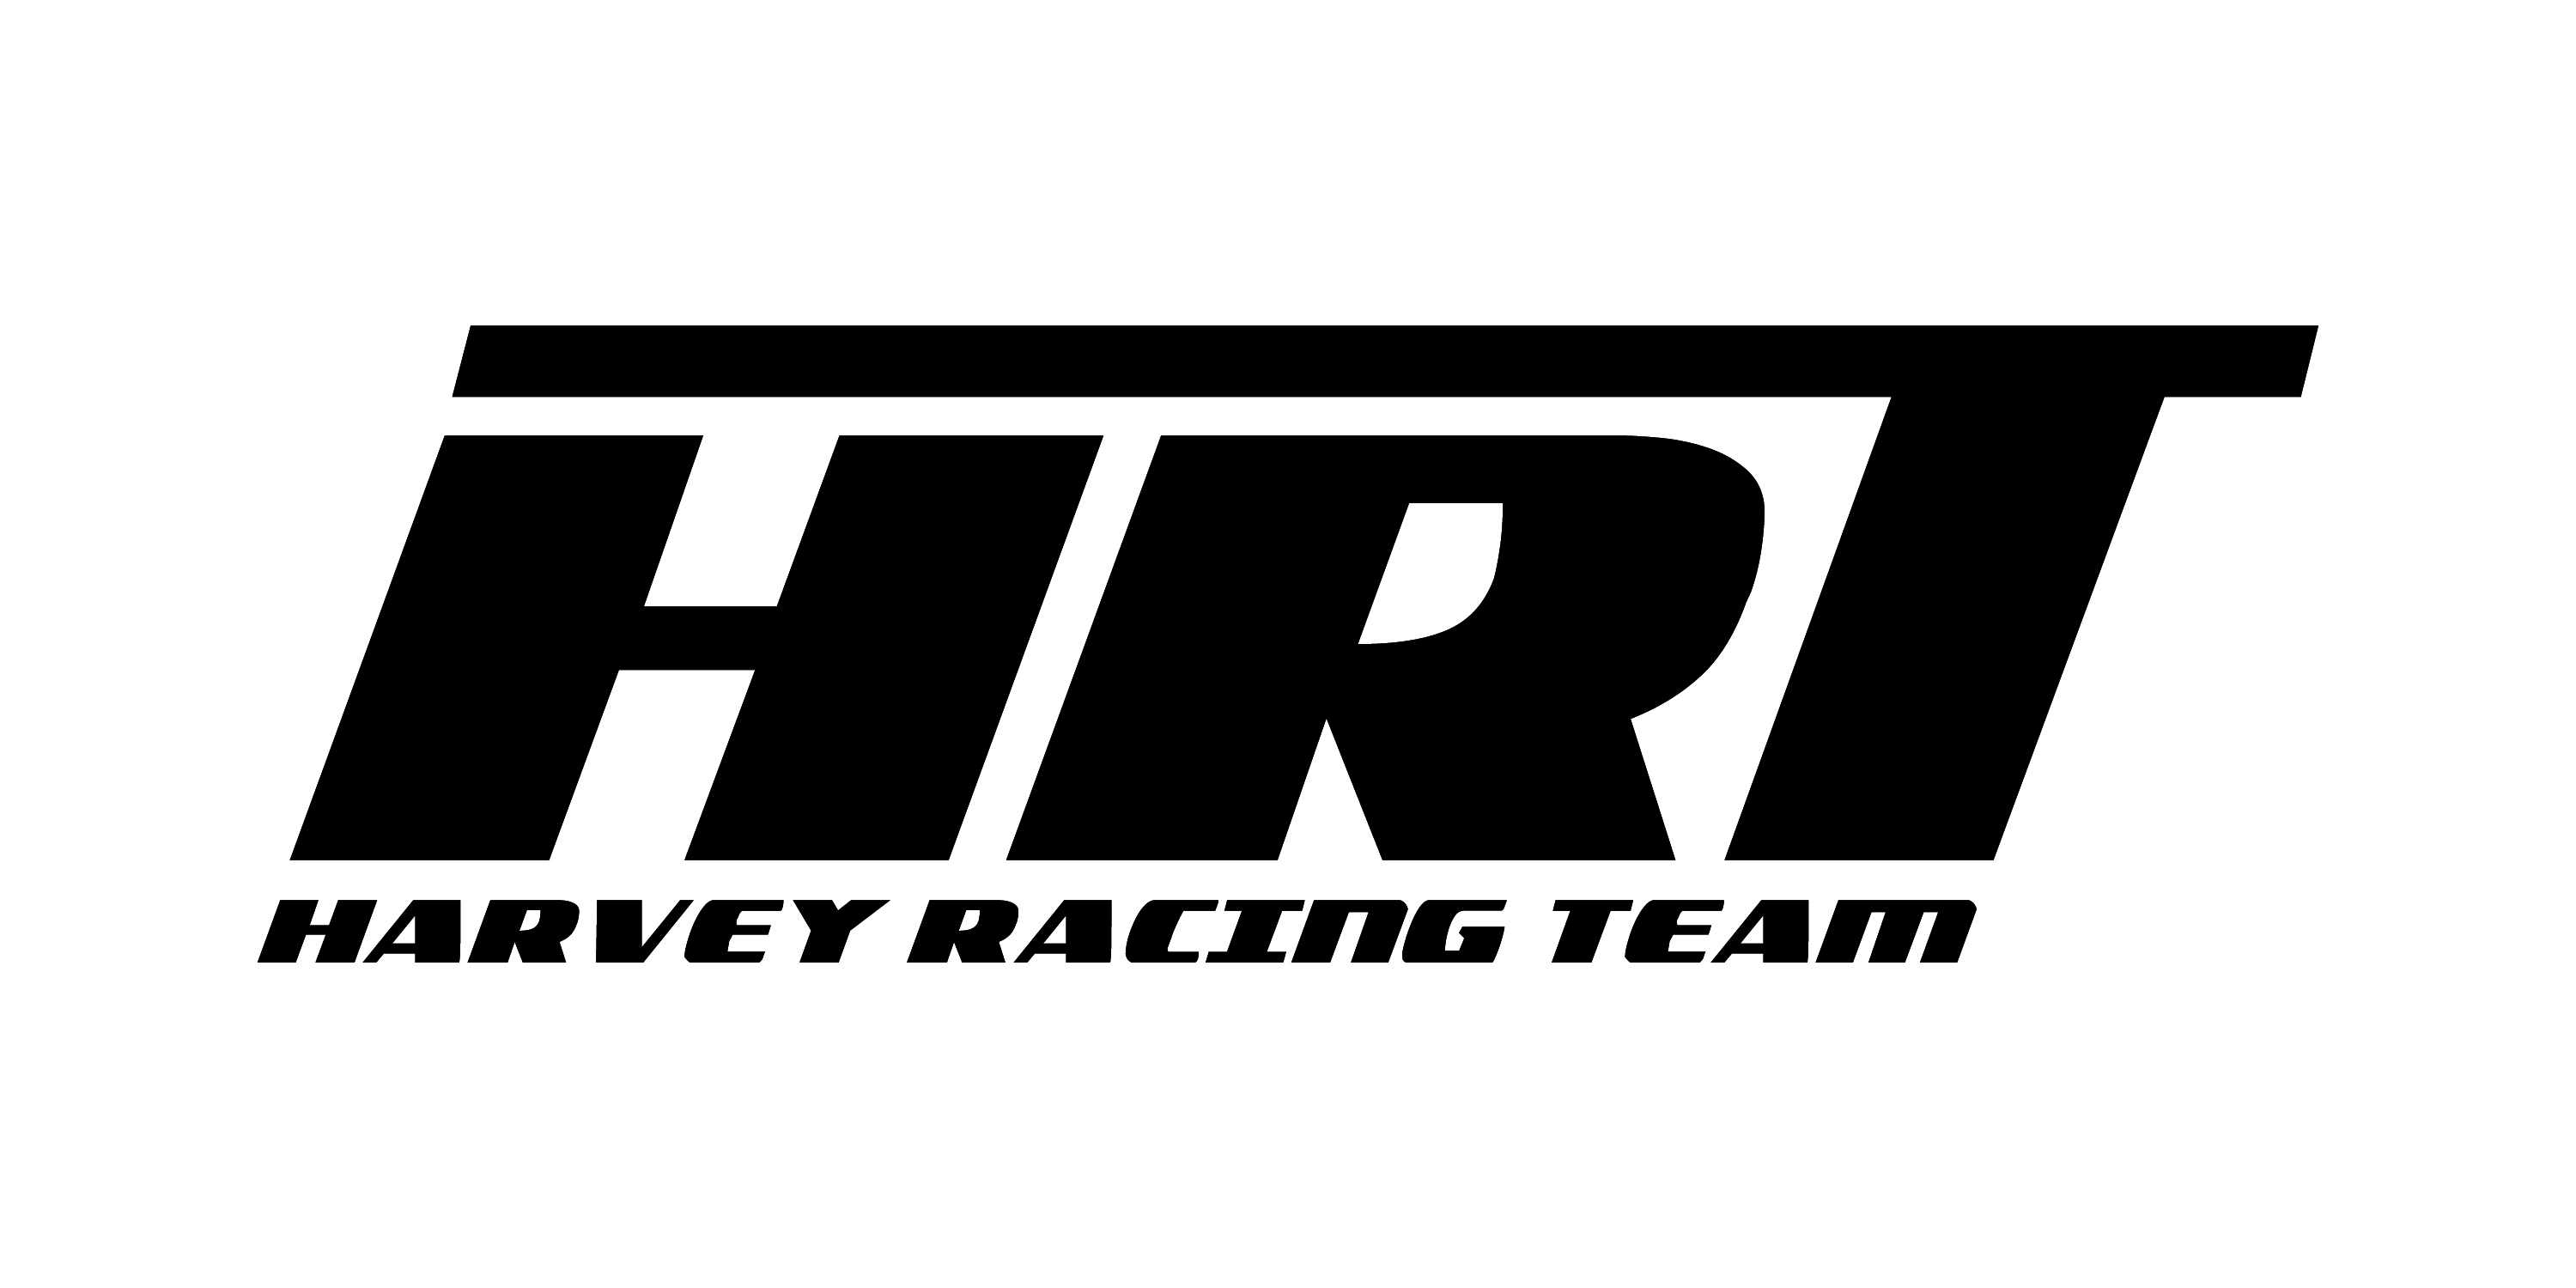 Harvey Racing Team